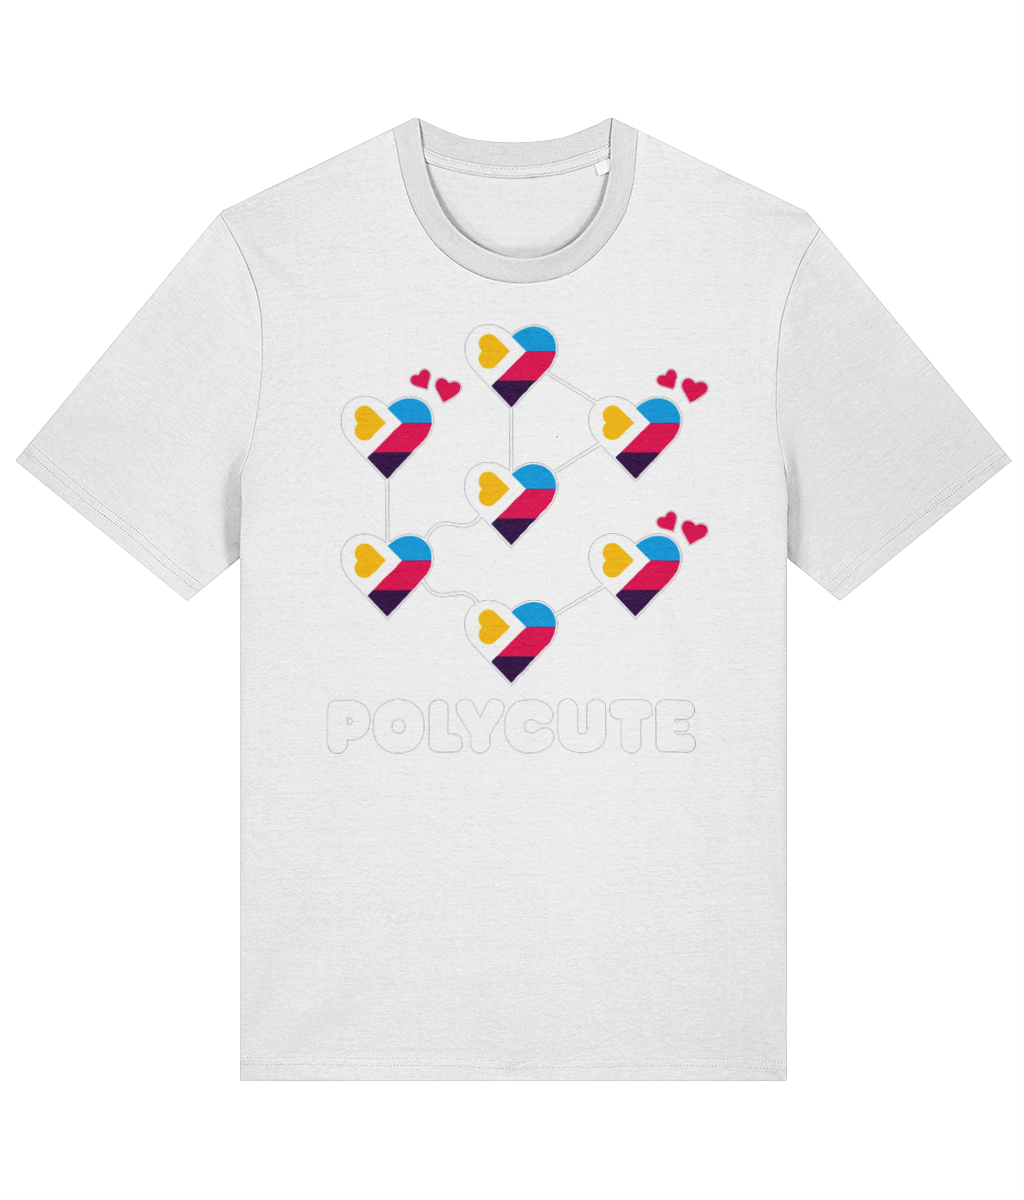 Polycute T-shirt